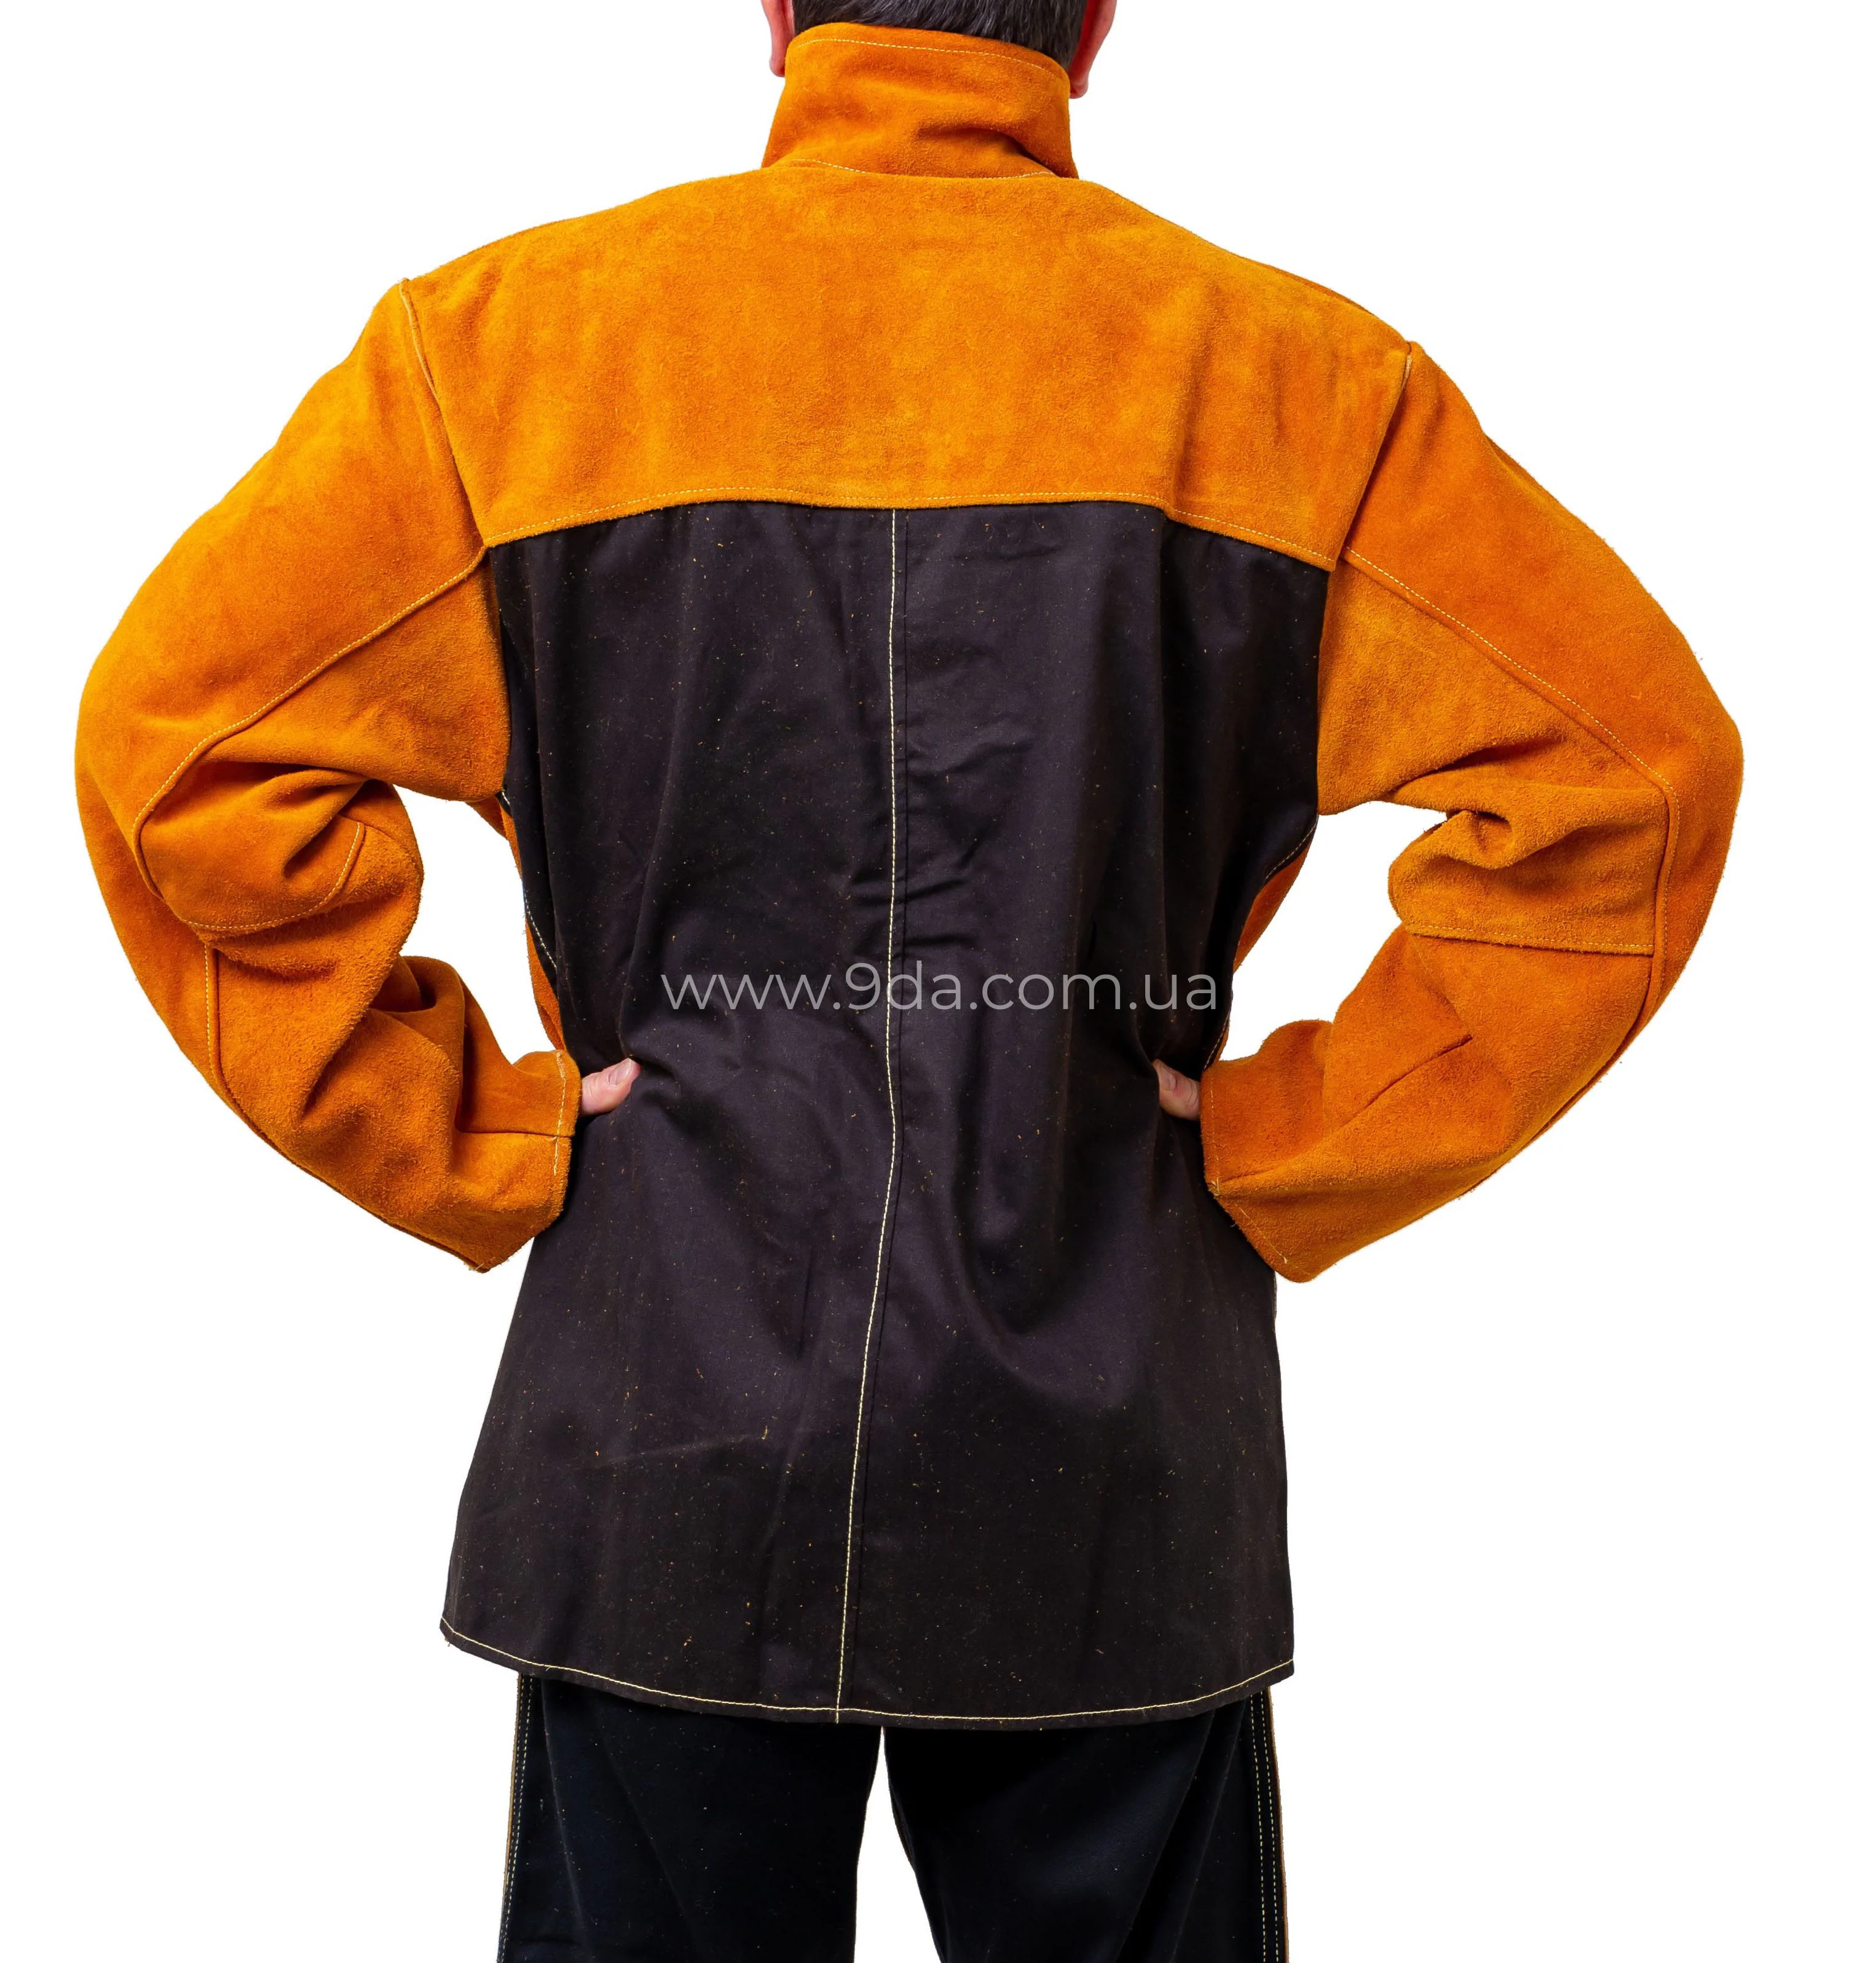 Куртка зварювальника, шкіряна, FR Front - Leather, Back Jacket Proban, size XL - 3